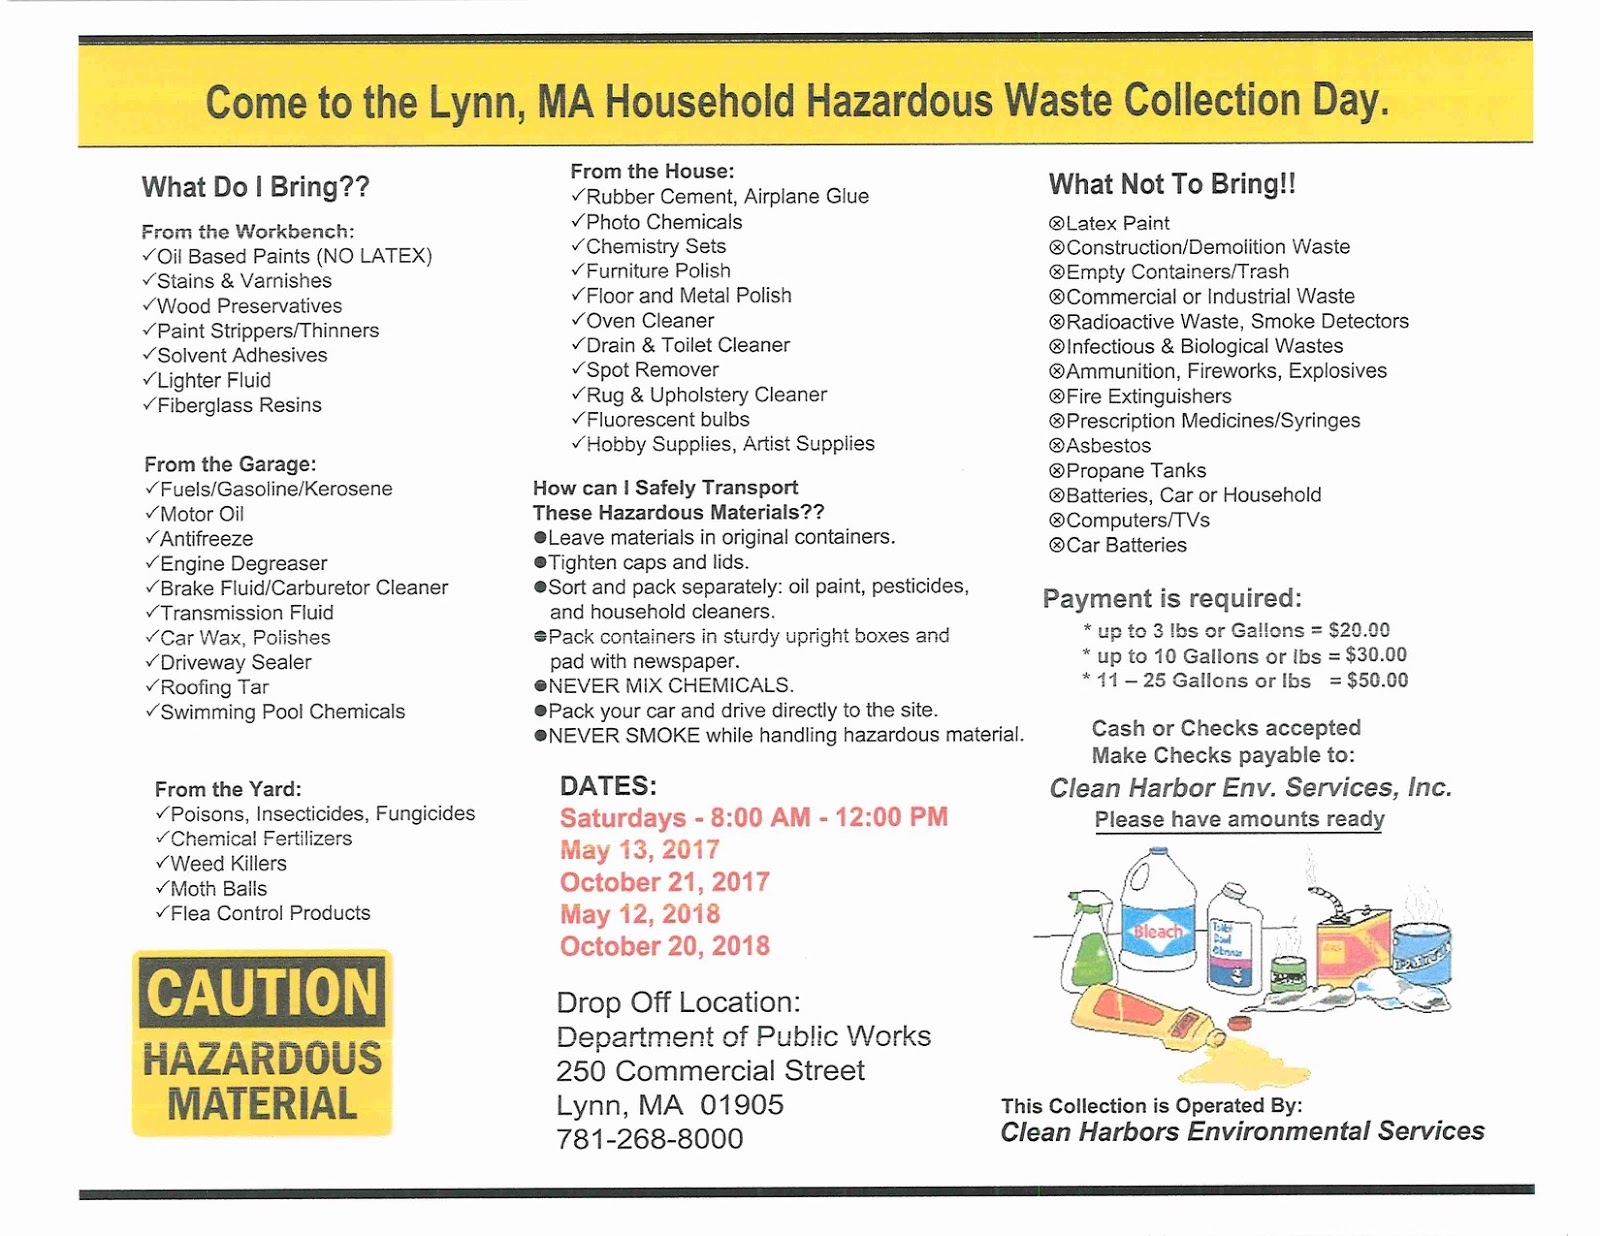 TrashTalkin Lynn Household Hazardous Waste Day is Saturday May 13